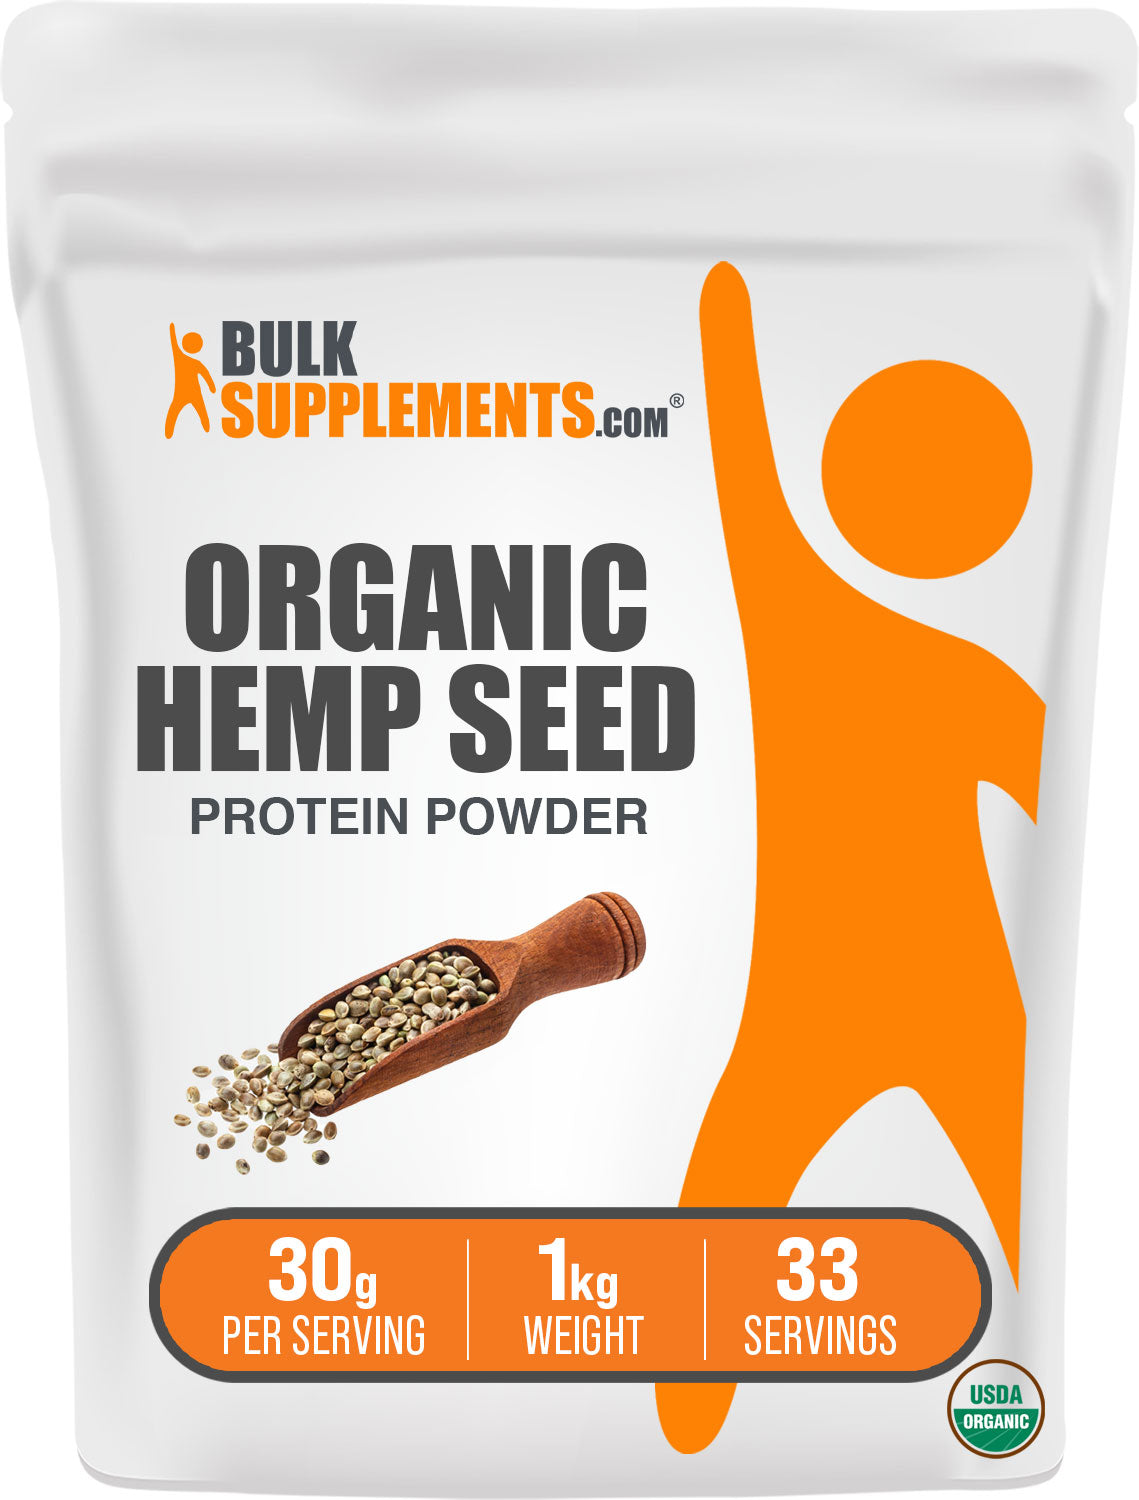 BulkSupplements Organic Hemp Seed Protein Powder 1kg bag